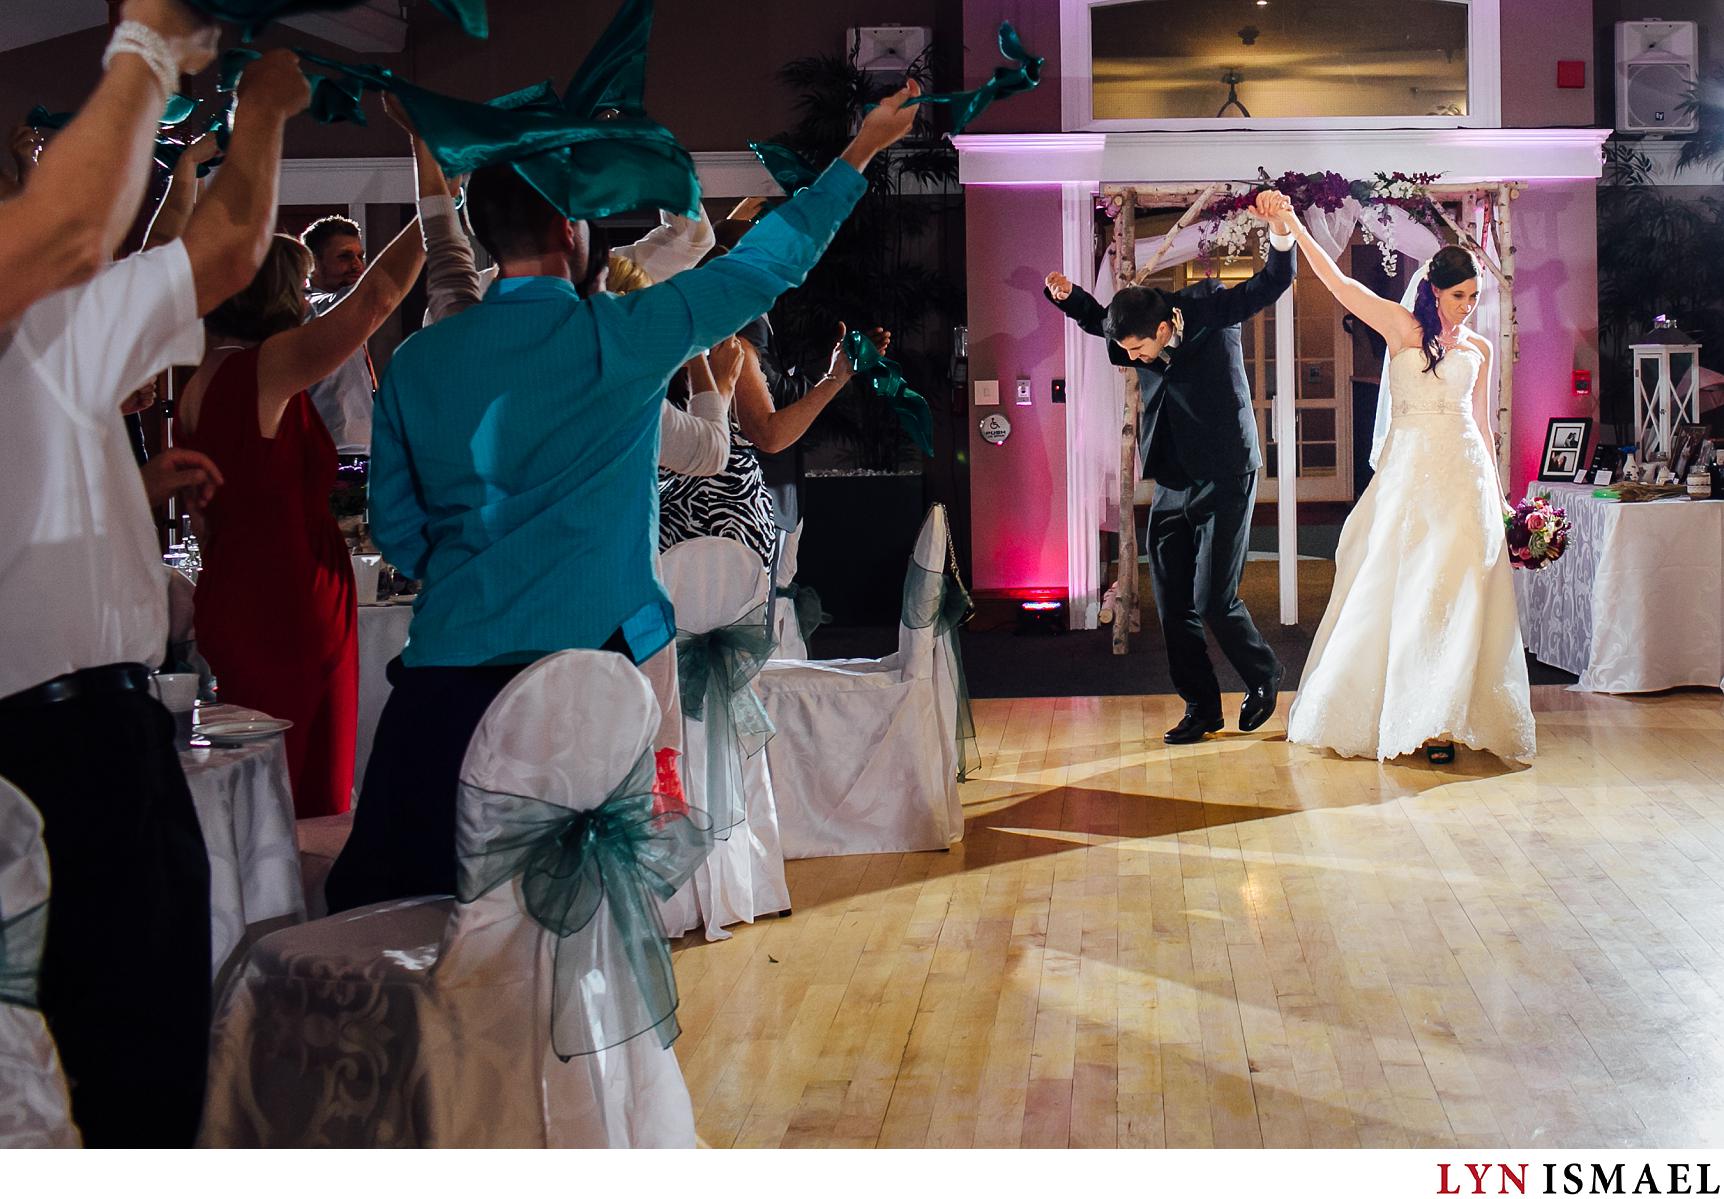 Bride and groom enters the dance floor